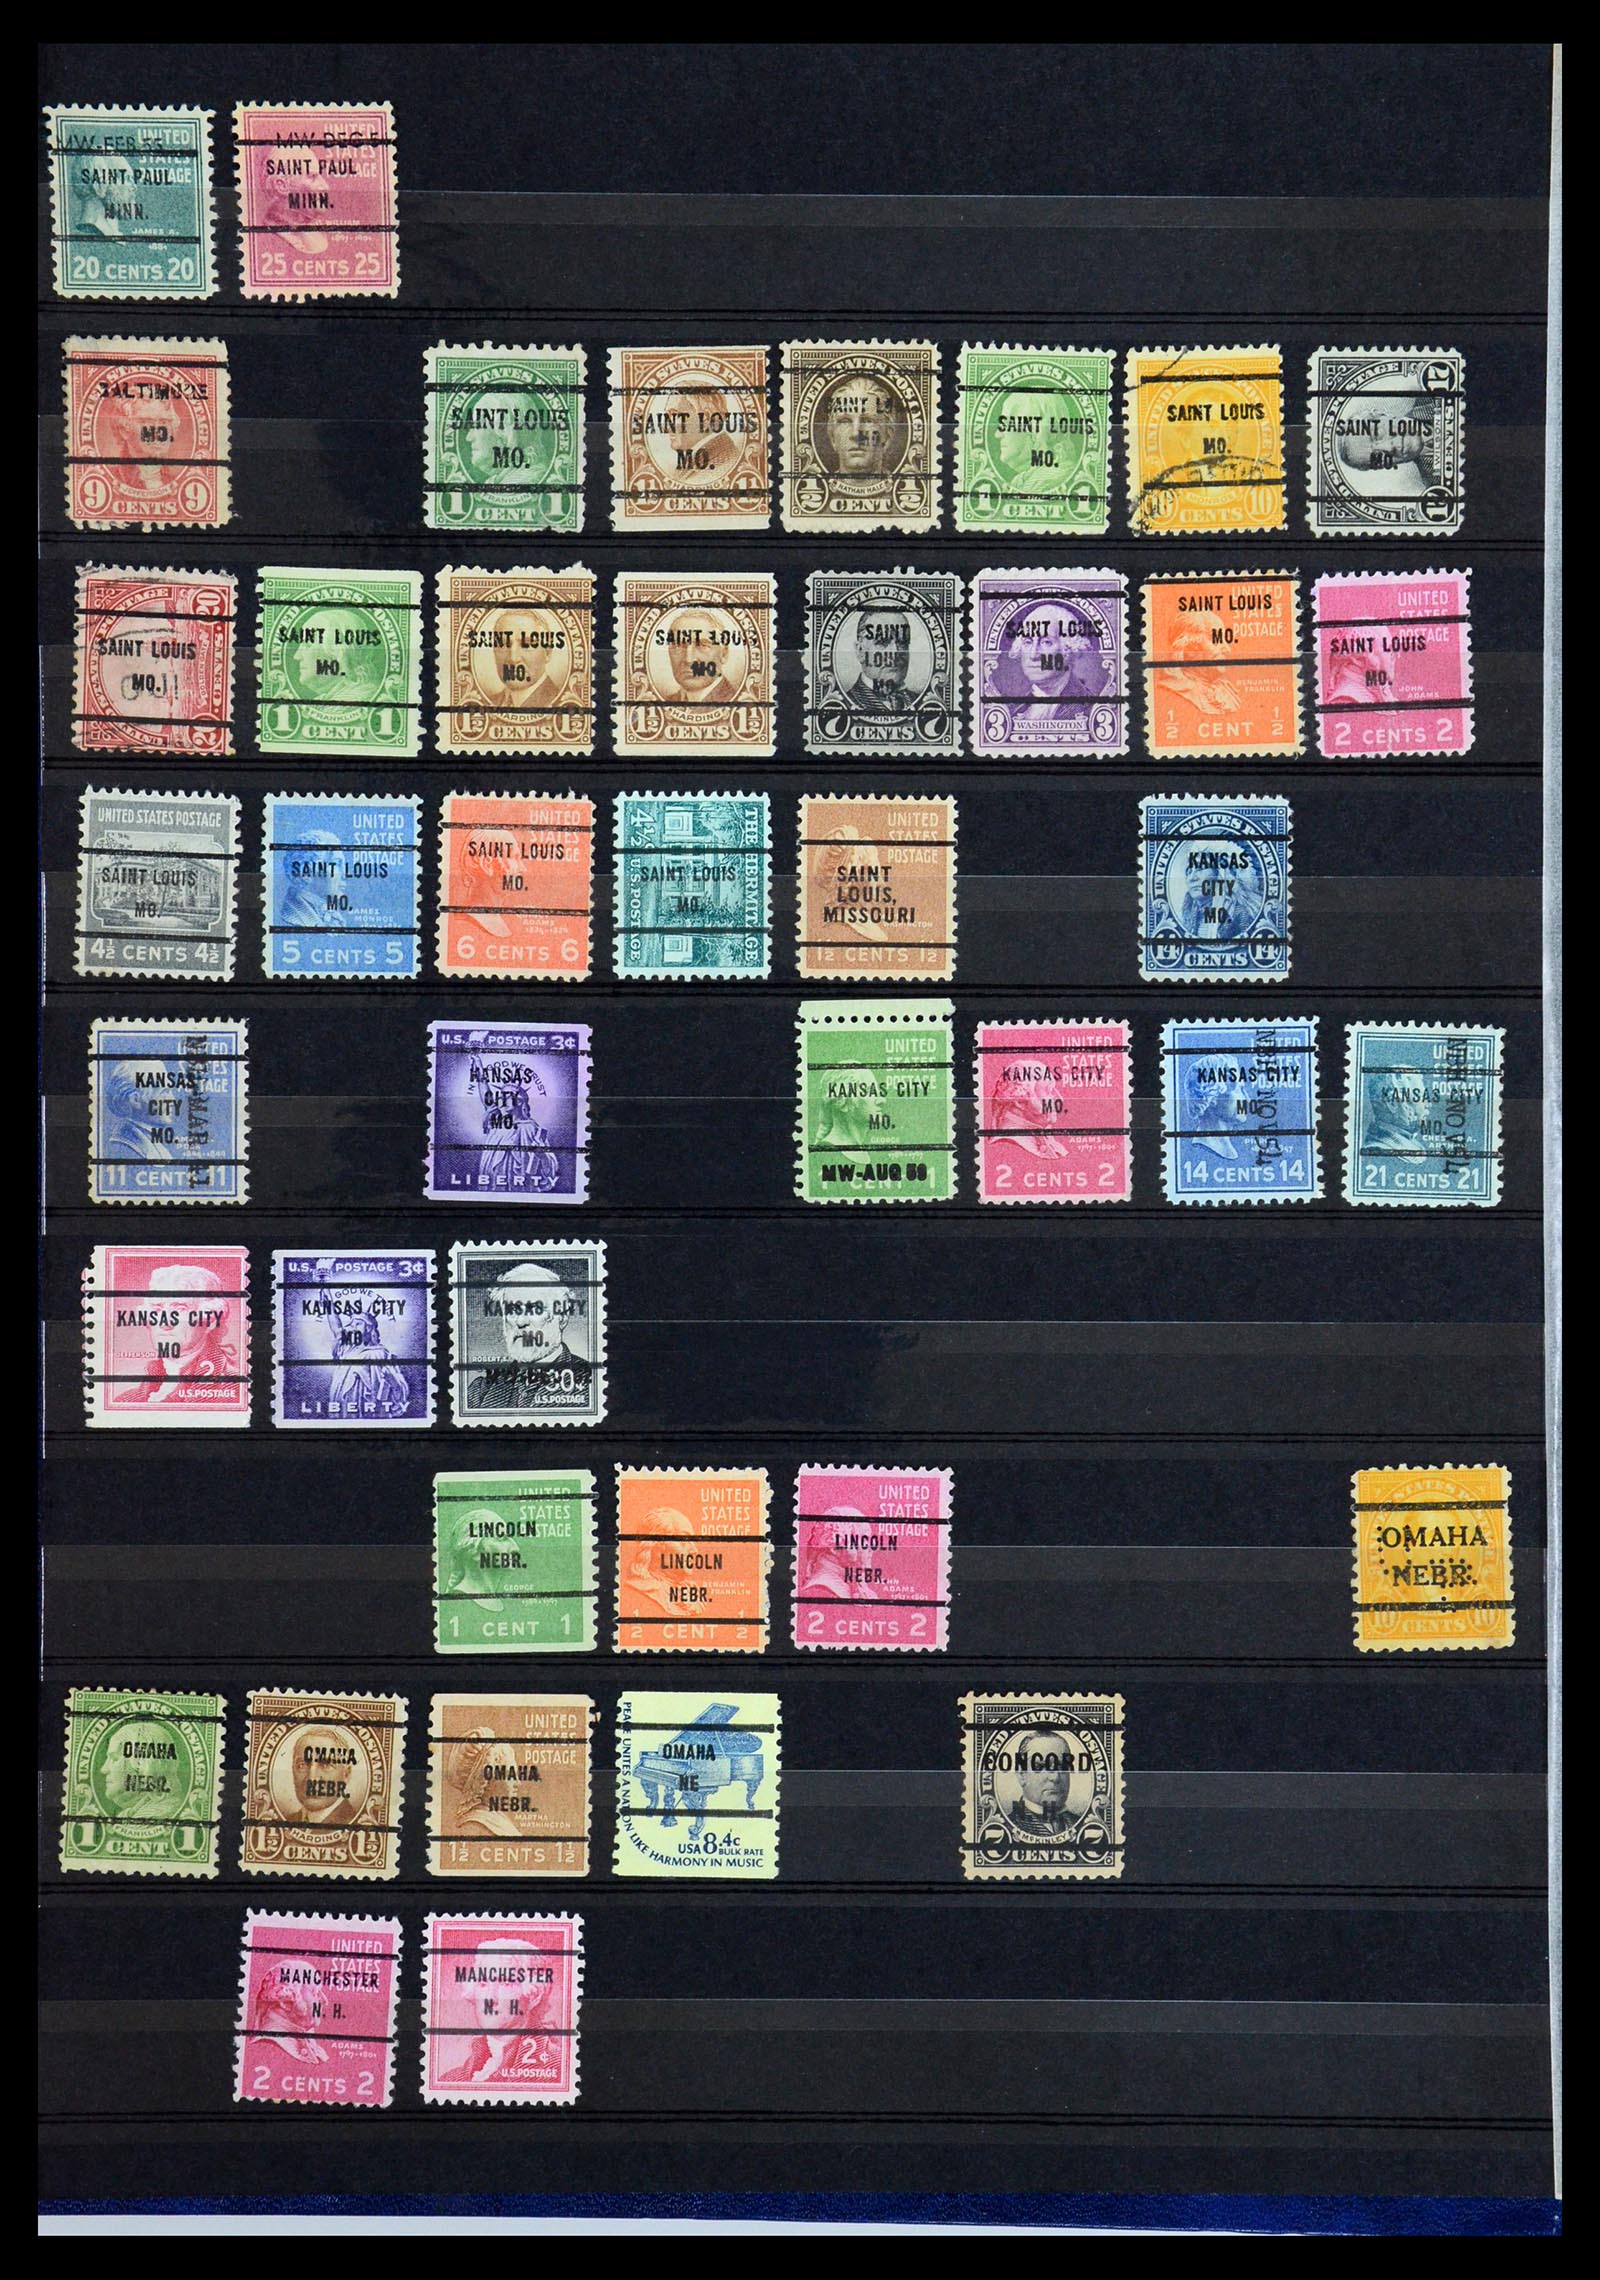 36382 023 - Stamp collection 36382 USA precancels.